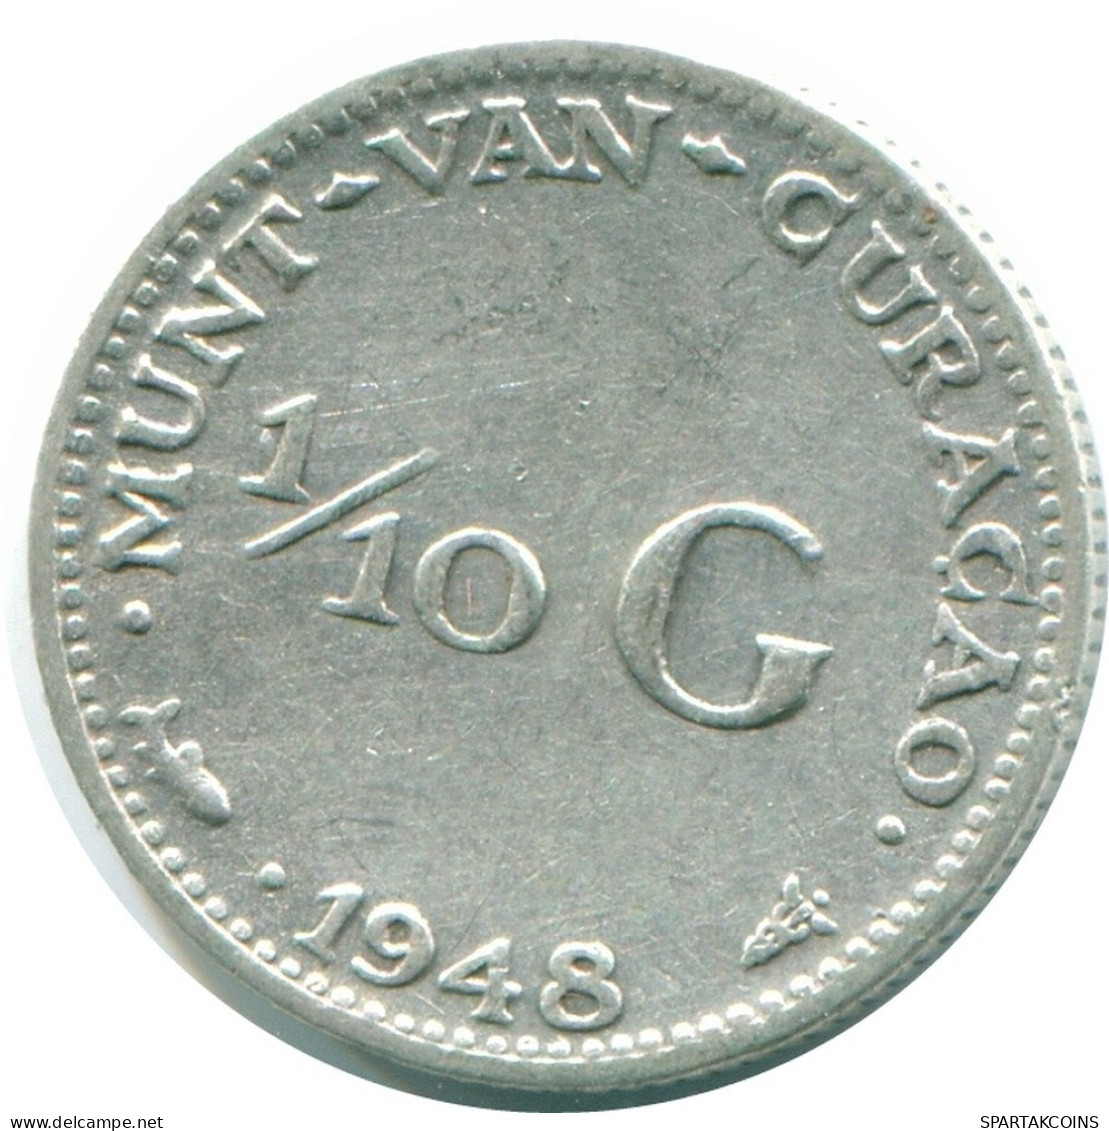 1/10 GULDEN 1948 CURACAO Netherlands SILVER Colonial Coin #NL11896.3.U.A - Curacao